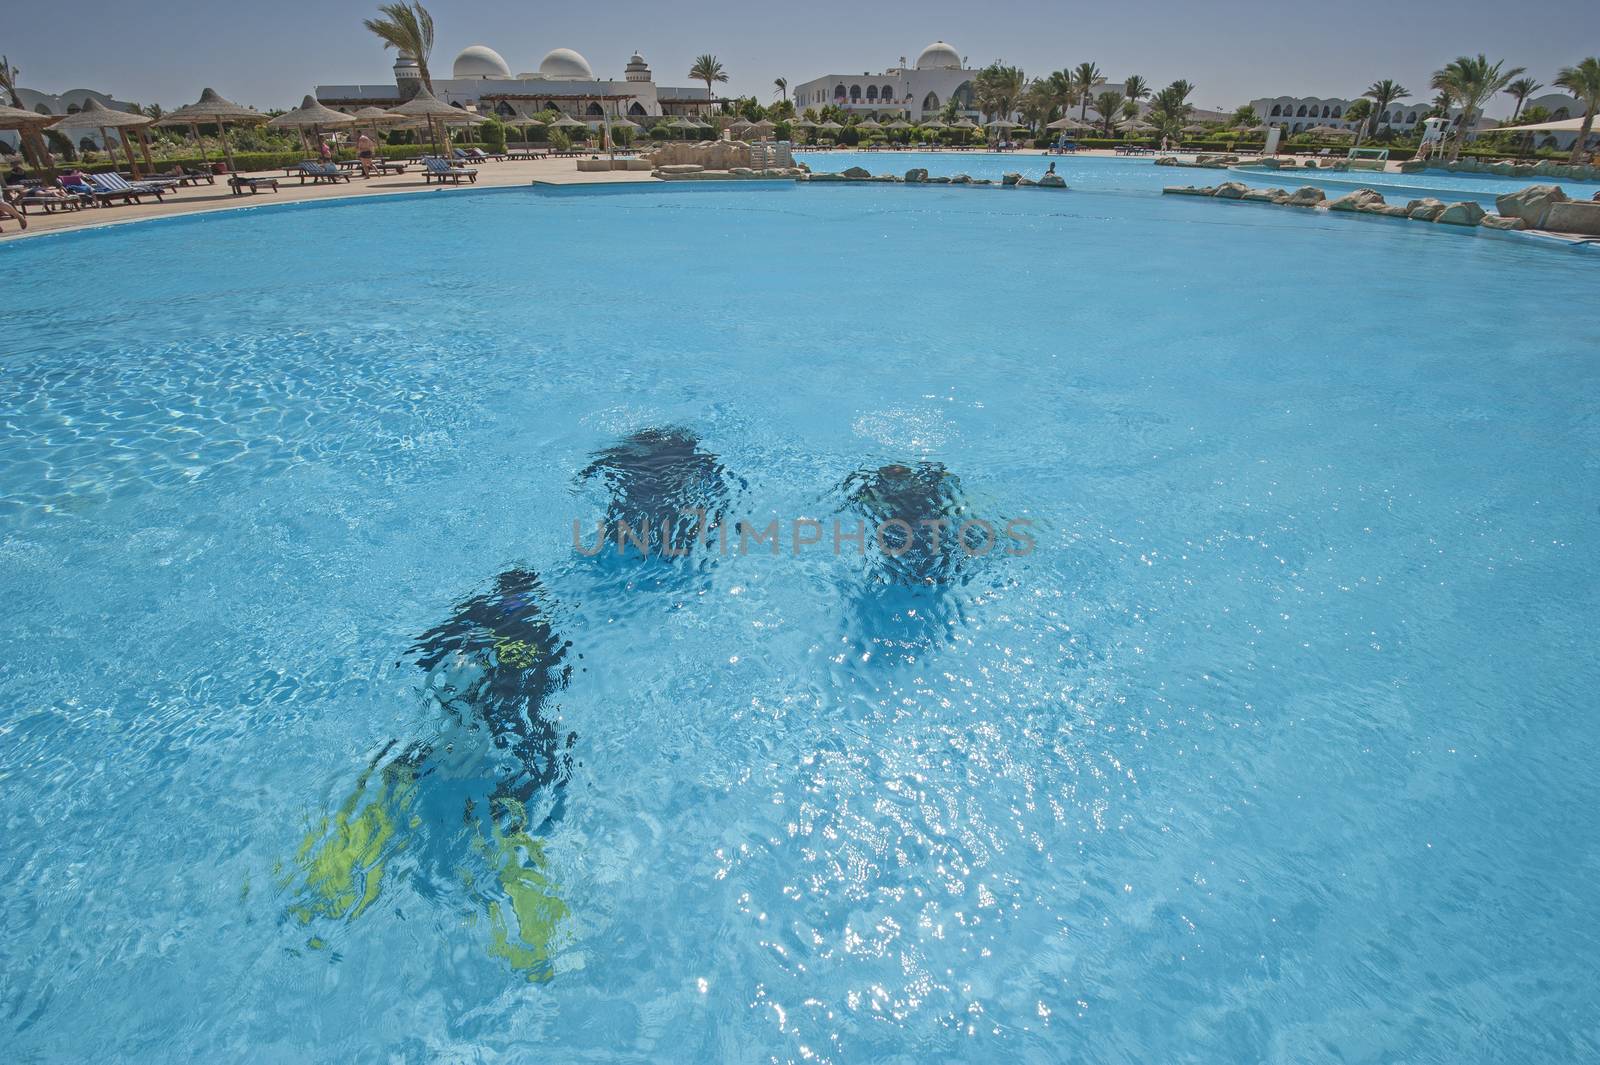 Scuba divers training in tropical hotel resort swimming pool by paulvinten